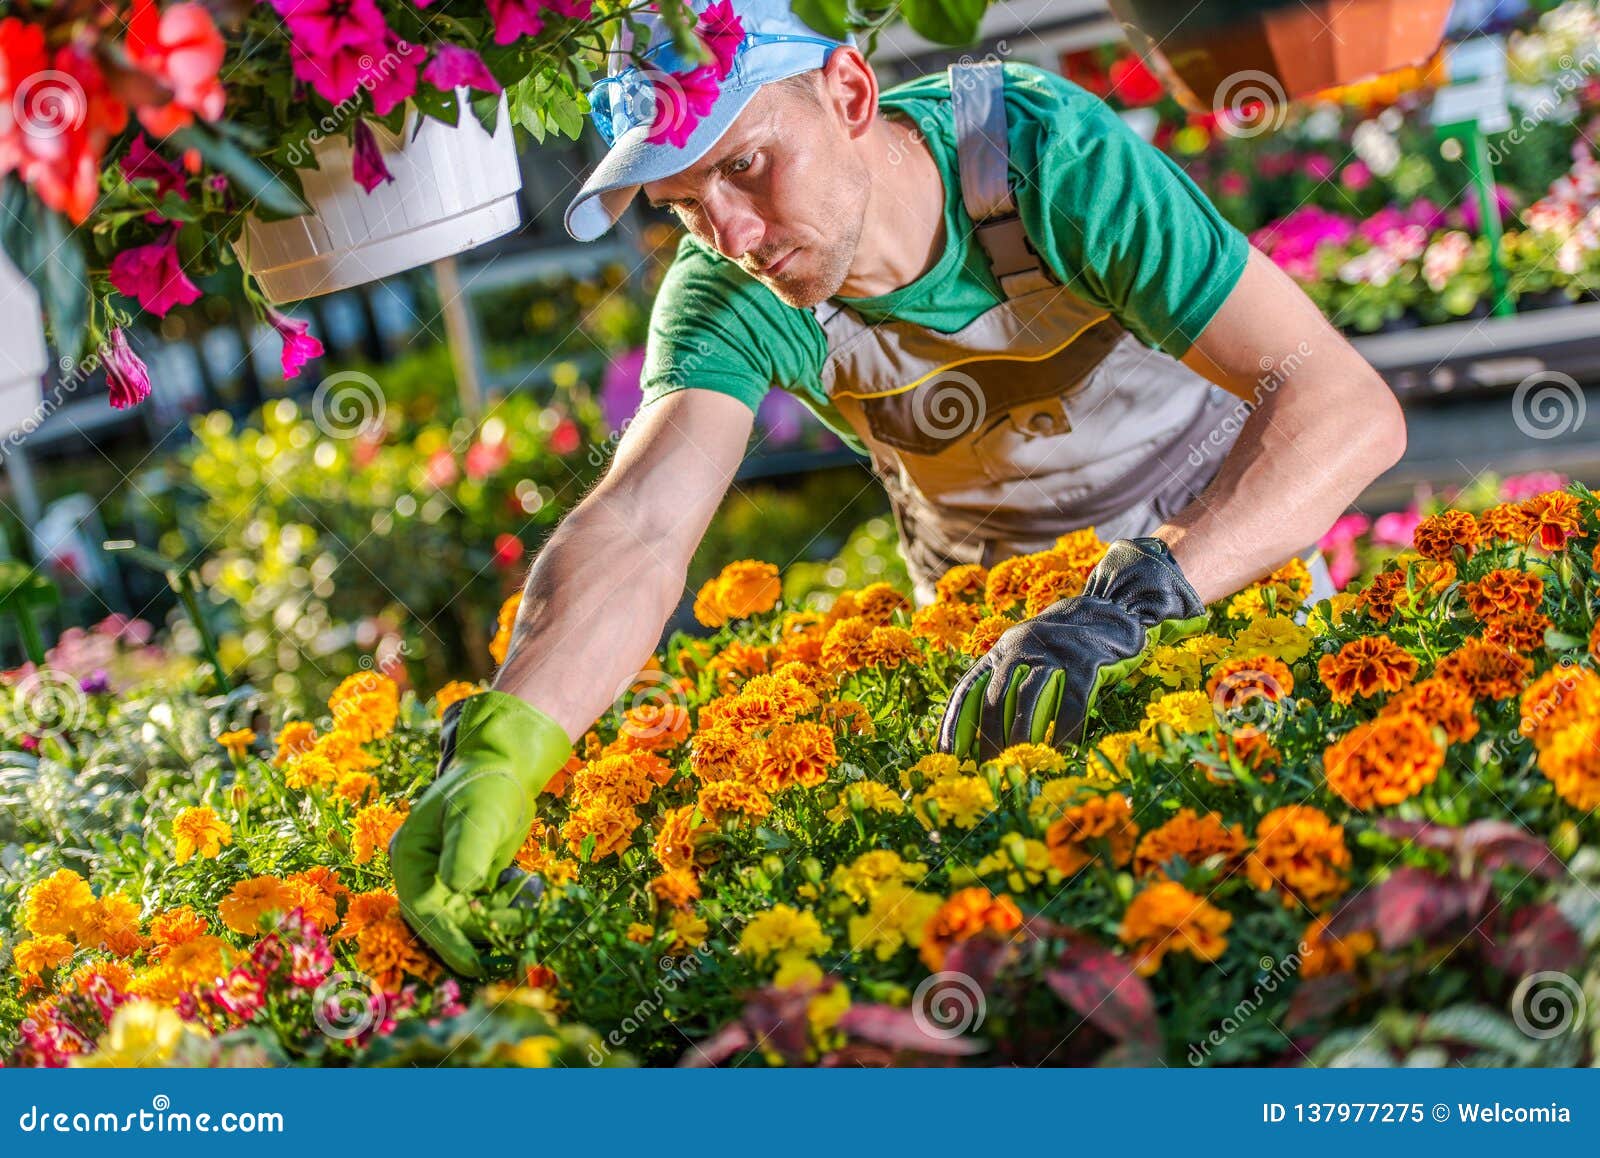 wholesale florist job